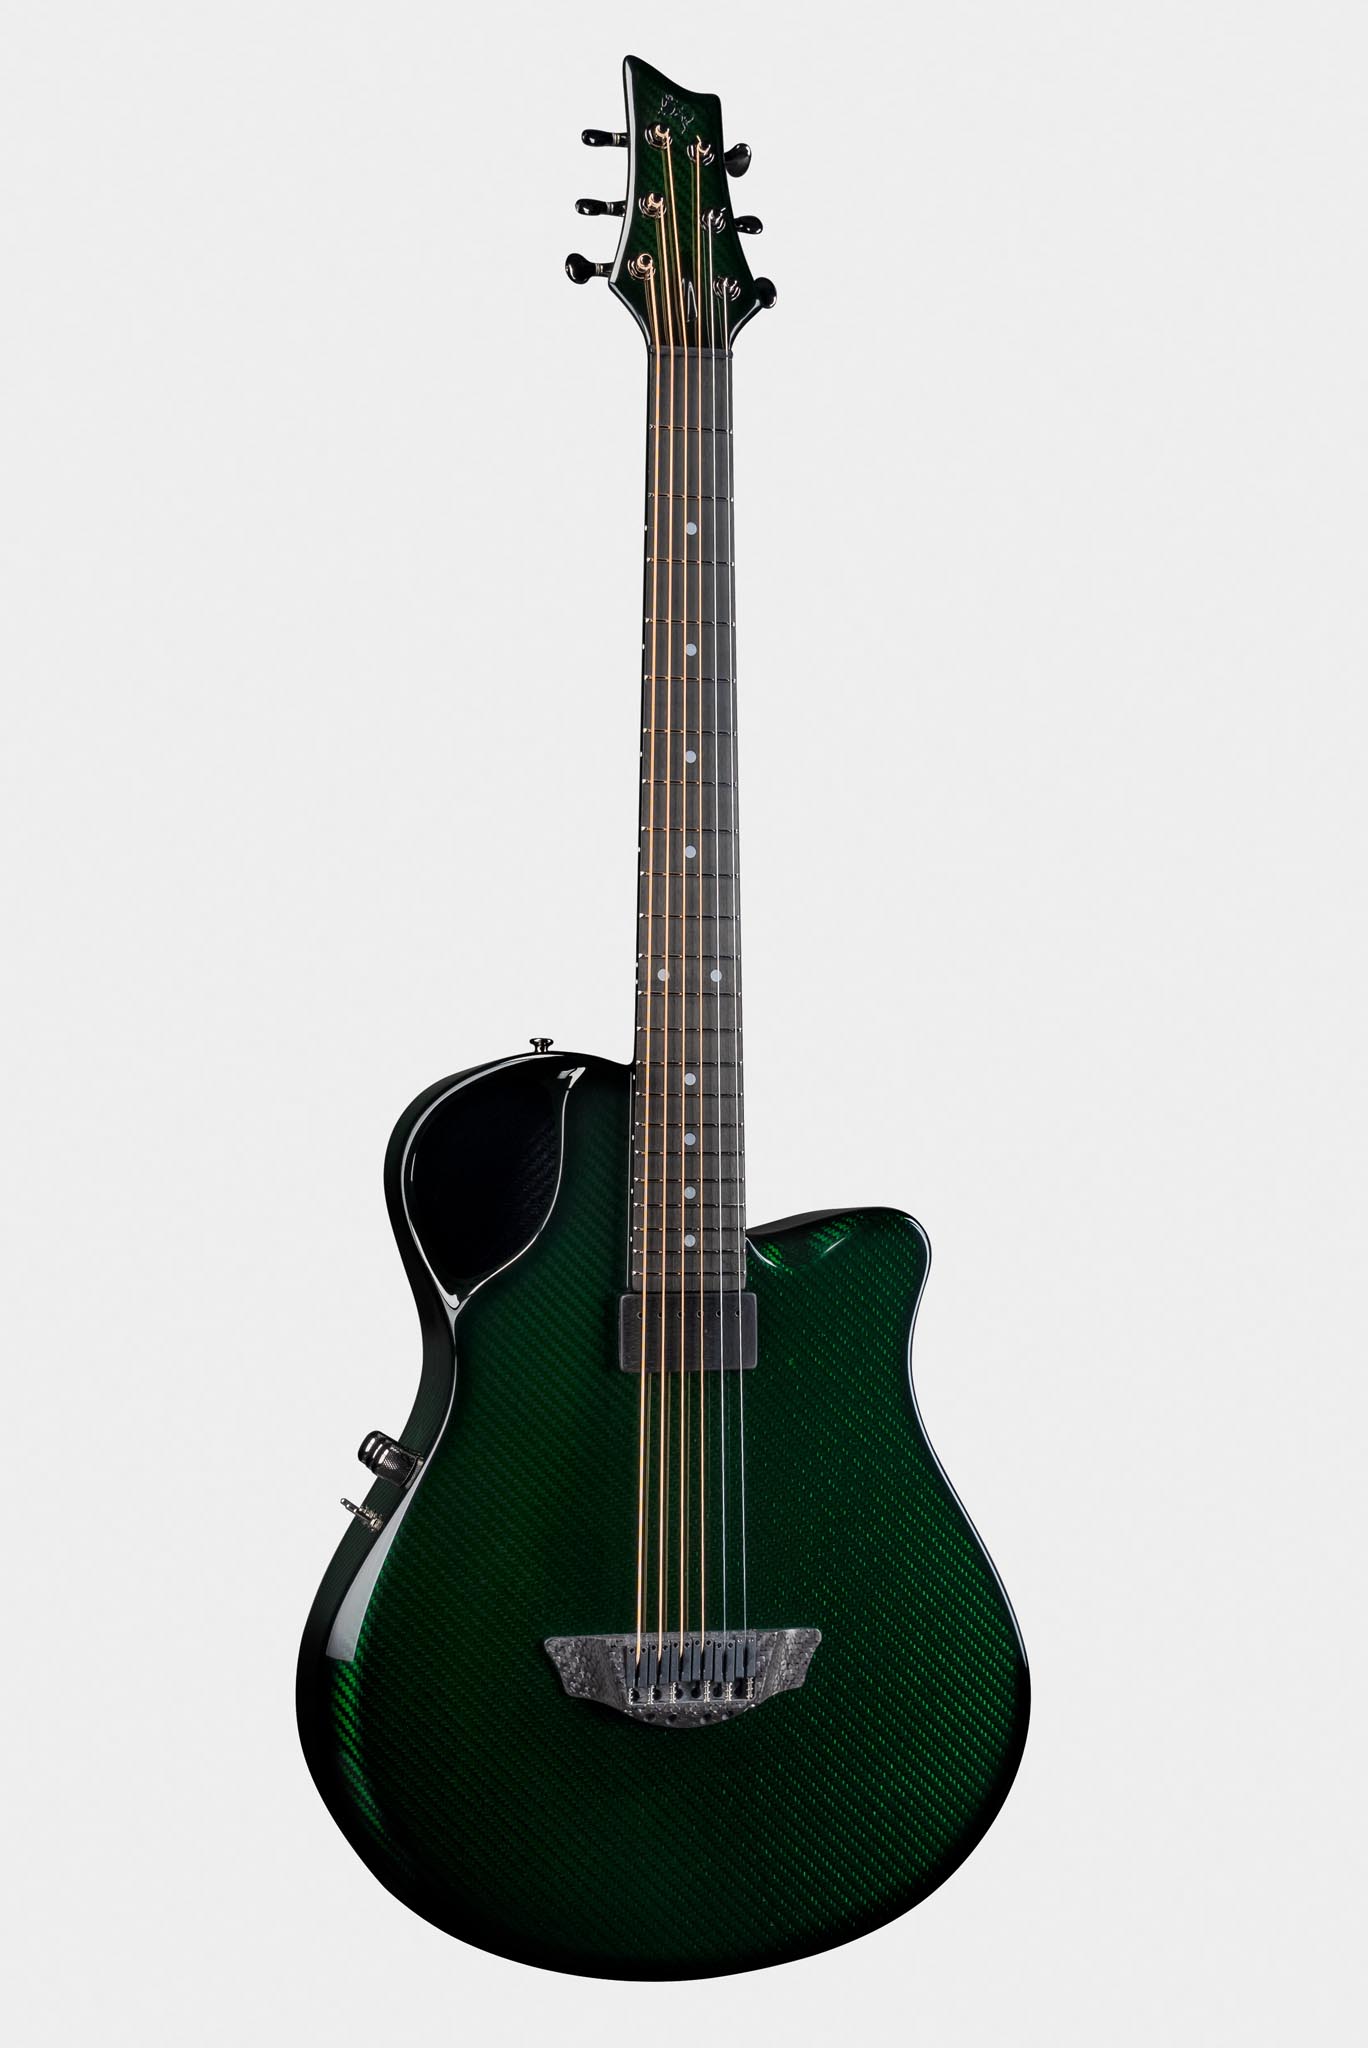 Emerald X10 Carbon Fiber Guitar with Green Finish